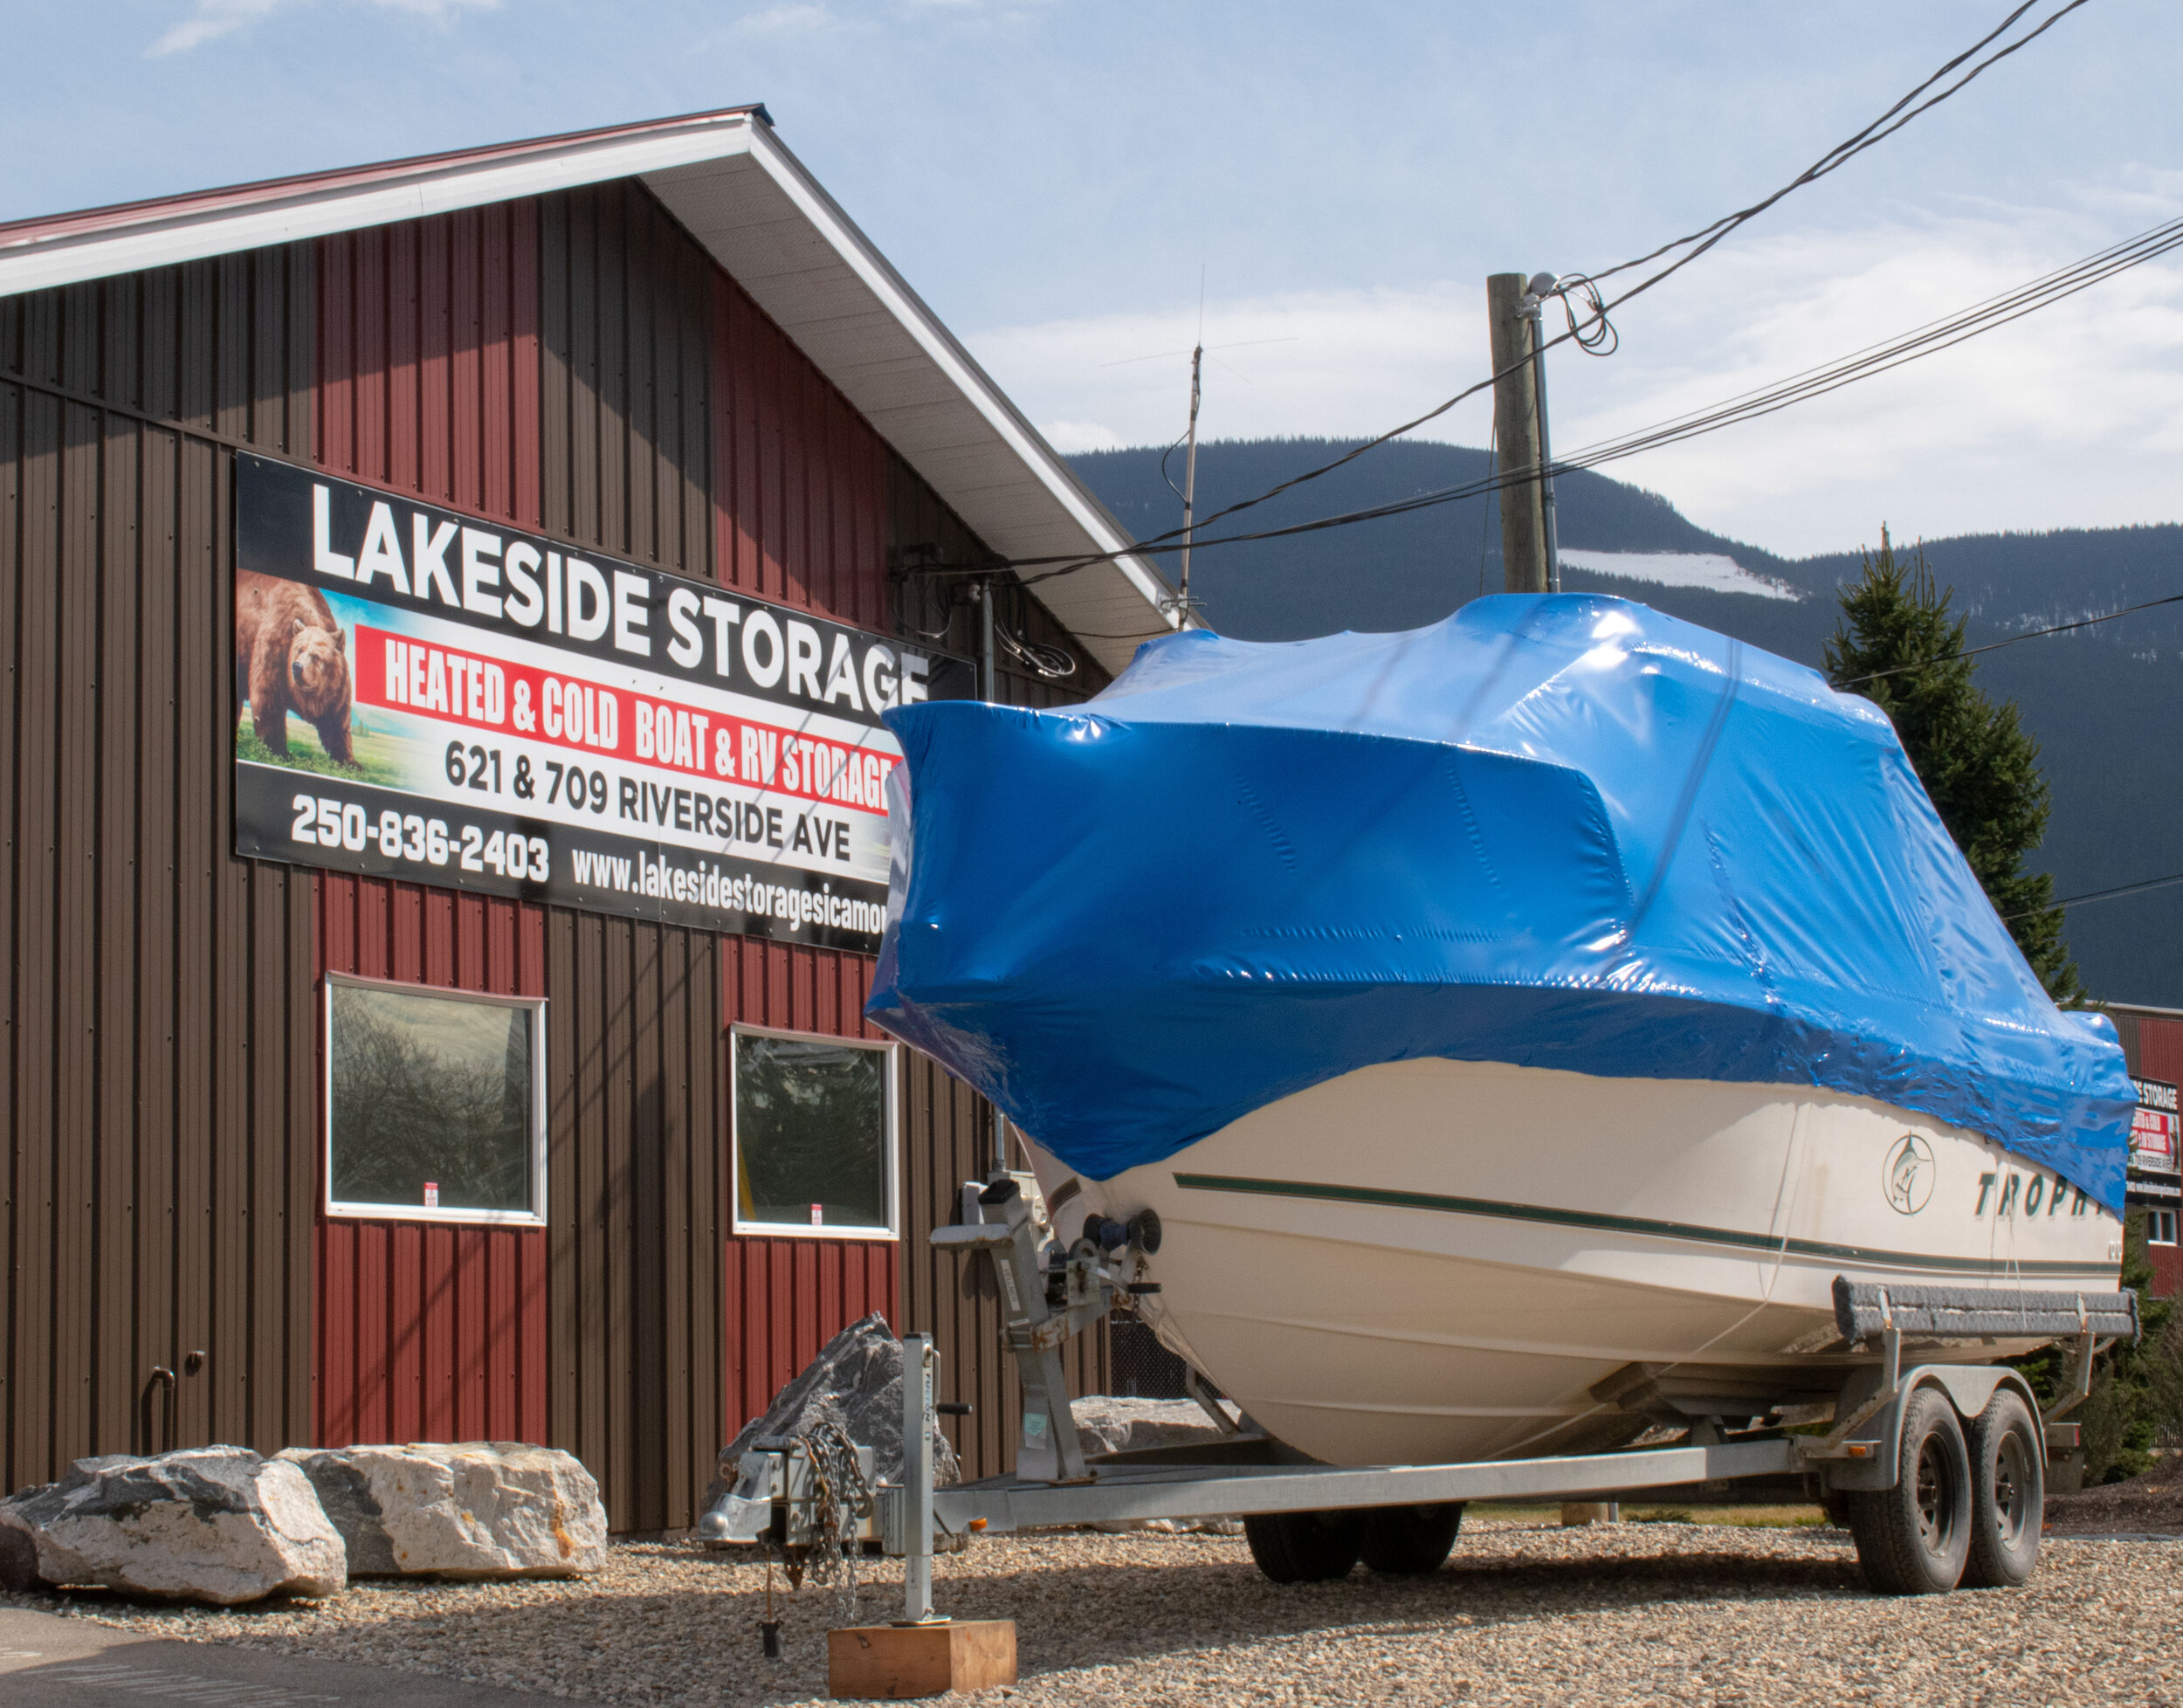 Lakeside Storage, Boat & RV Storage